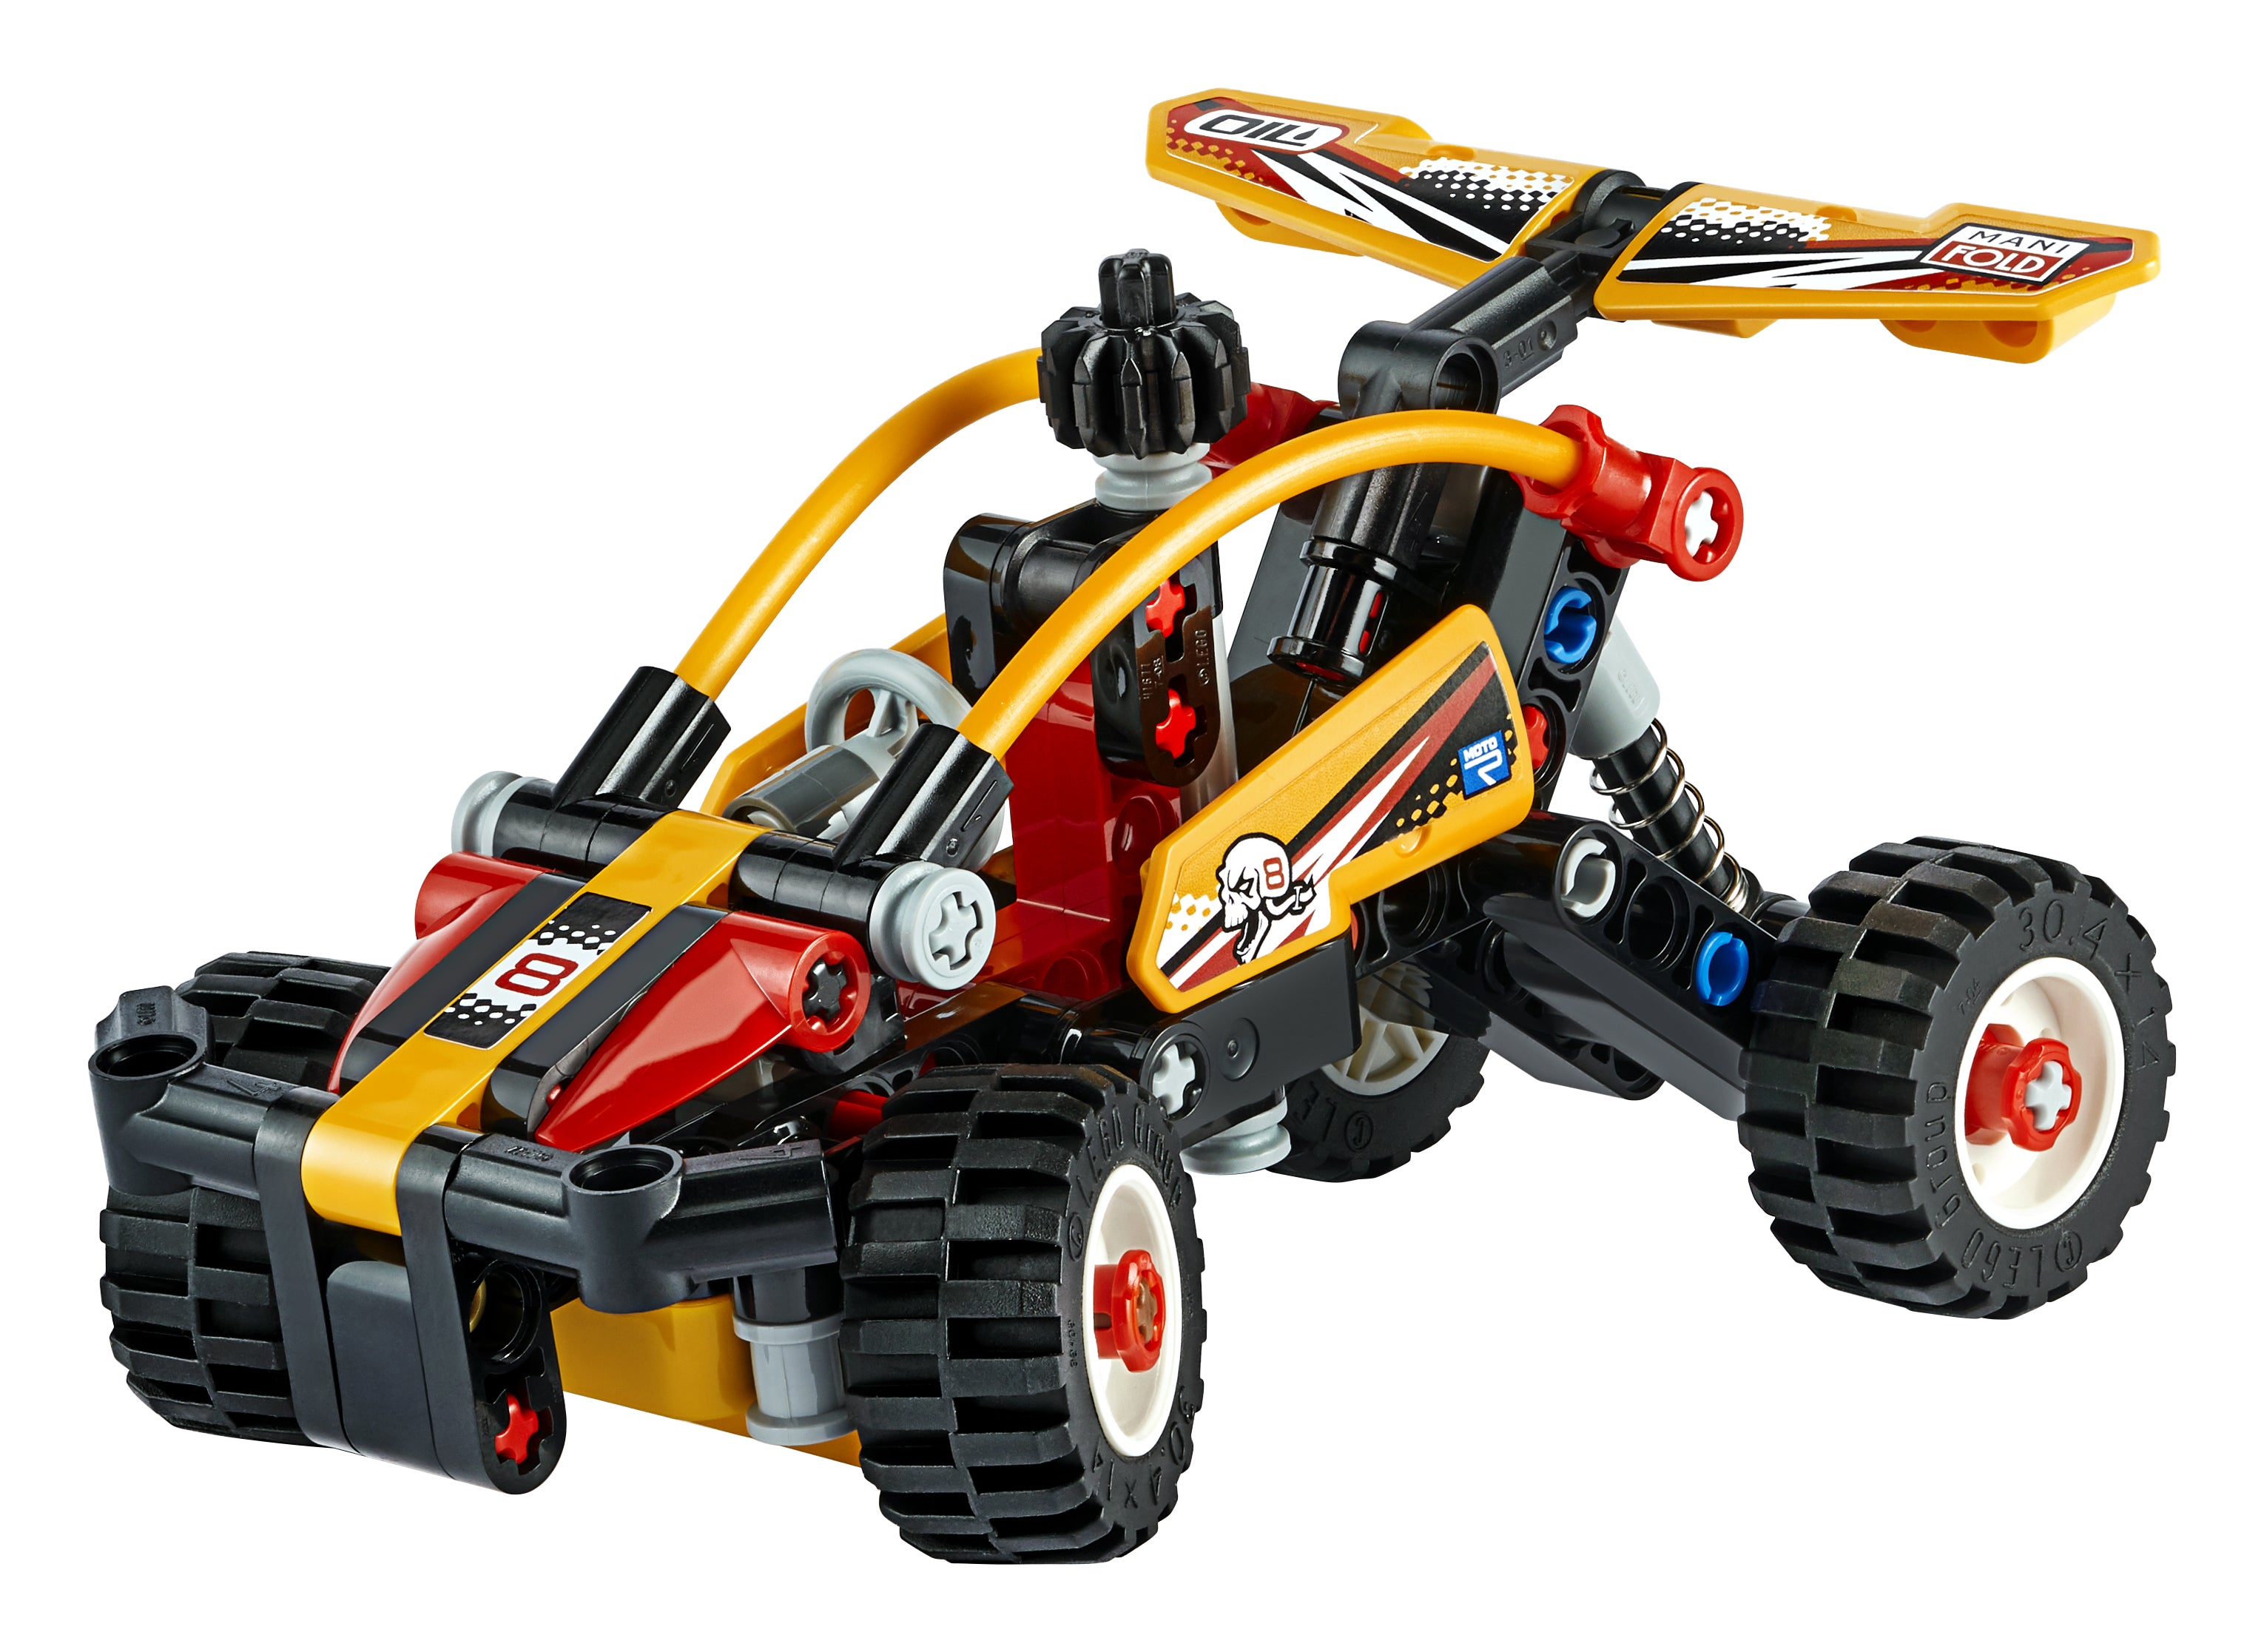 LEGO® Technic Buggy Set 42101 Default Title